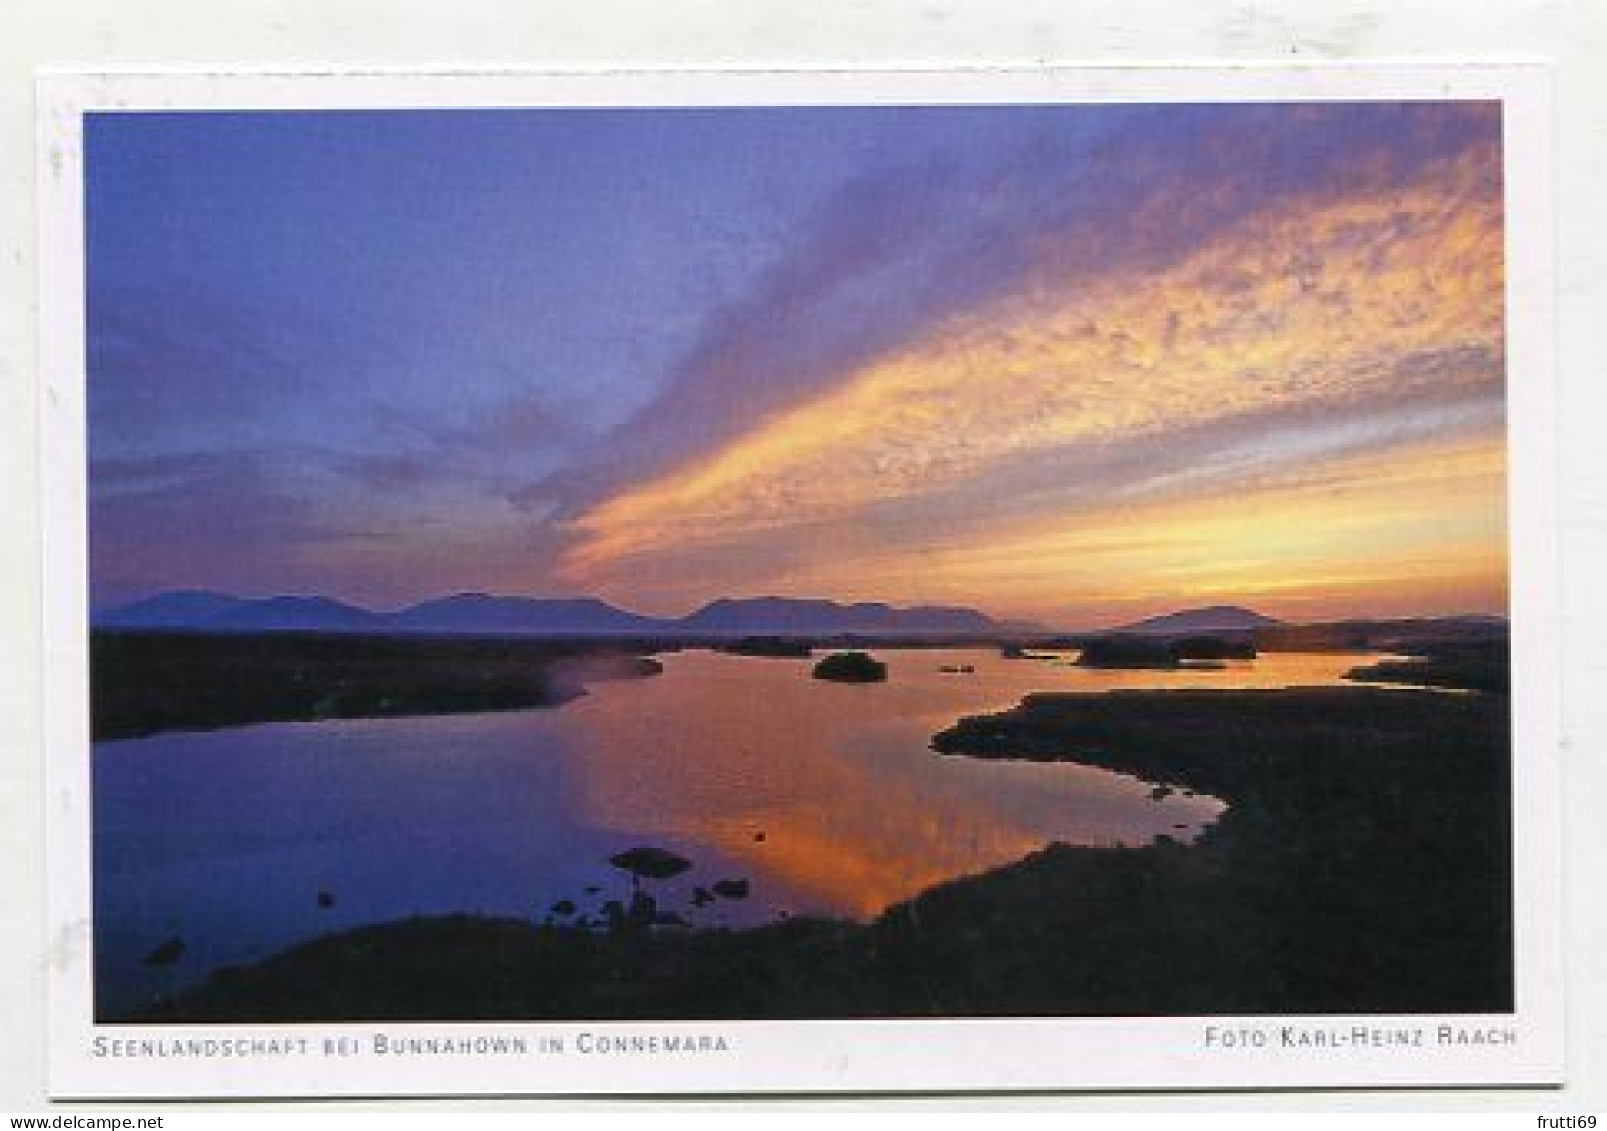 AK 177094 IRELAND - Seenlandschaft Bei Bunnahown In Connemara - Galway